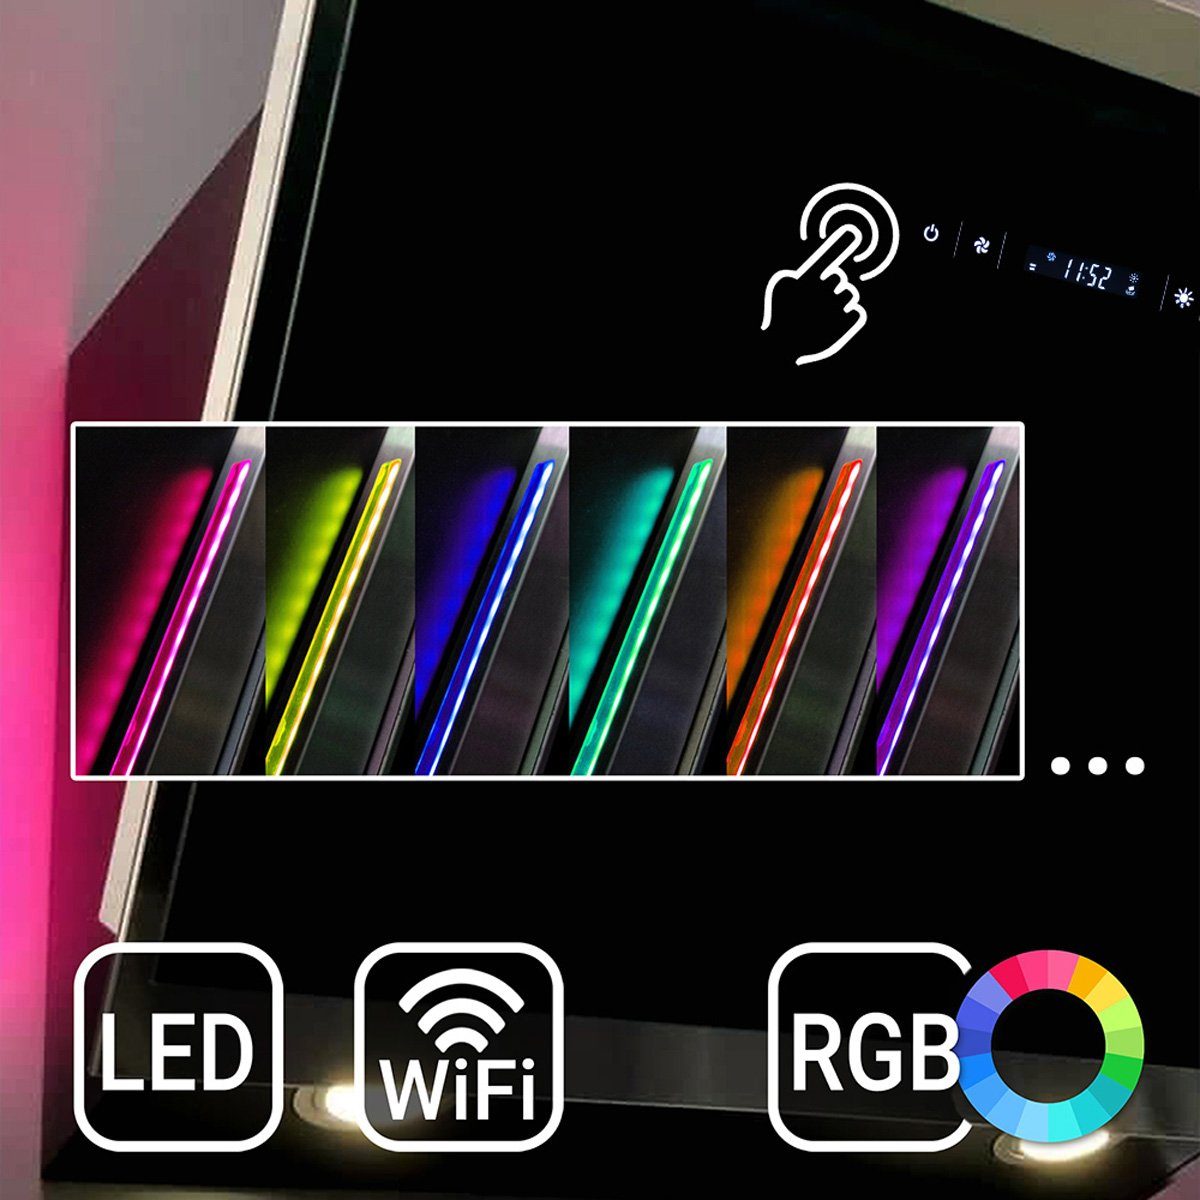 / KOLBE RGBW Wandhaube / Smarte Glas HERMES608SM WiFi-App 60cm / Kopffreihaube Leise Ambientebeleuchtung, KKT / / 60cm Dunstabzugshaube Edelstahl